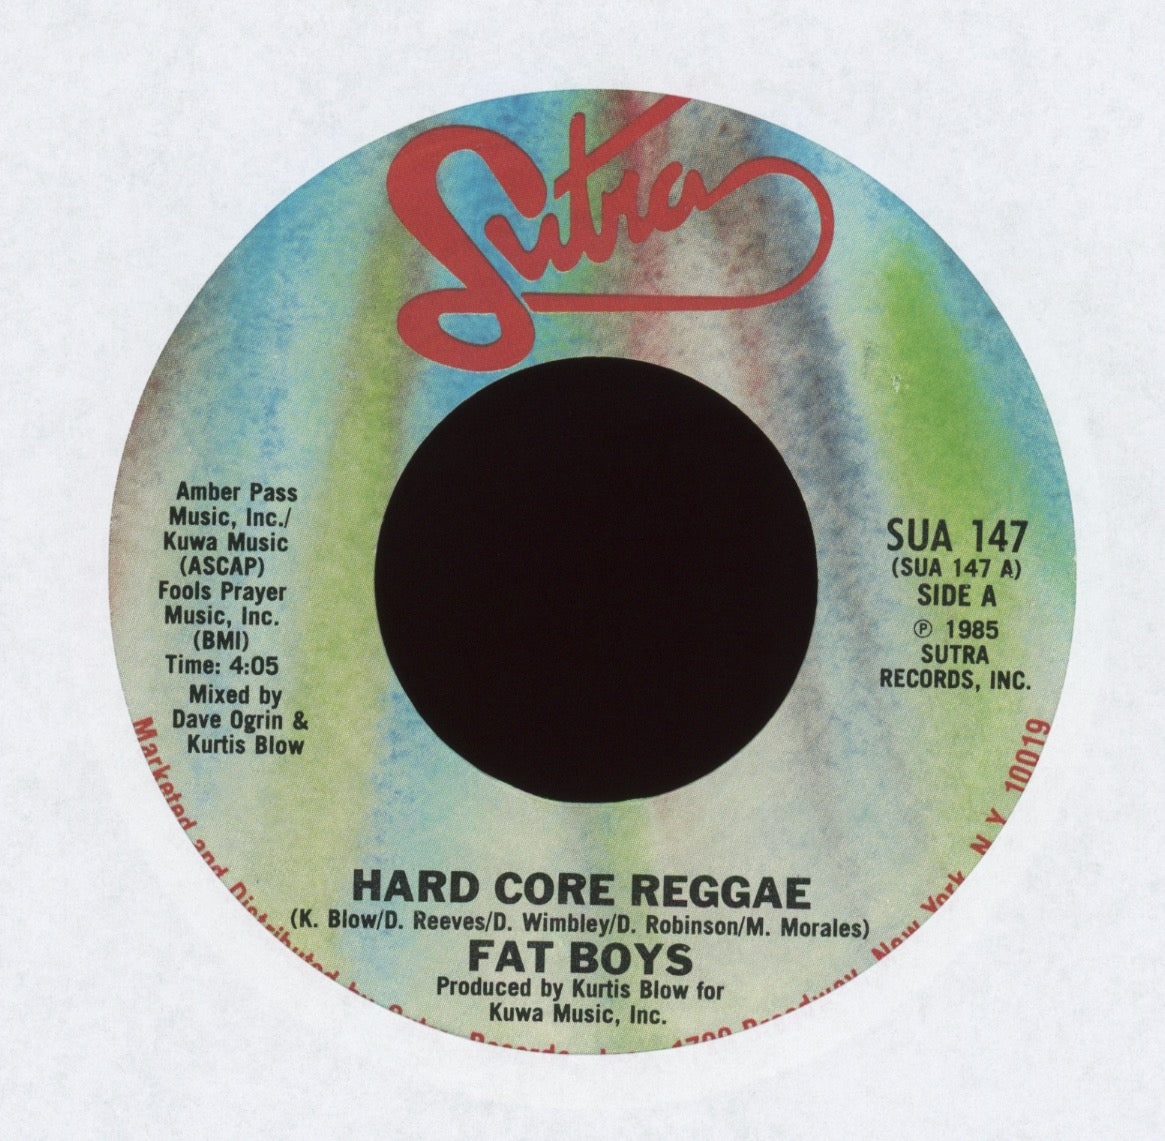 Fat Boys - Hard Core Reggae on Kama Sutra